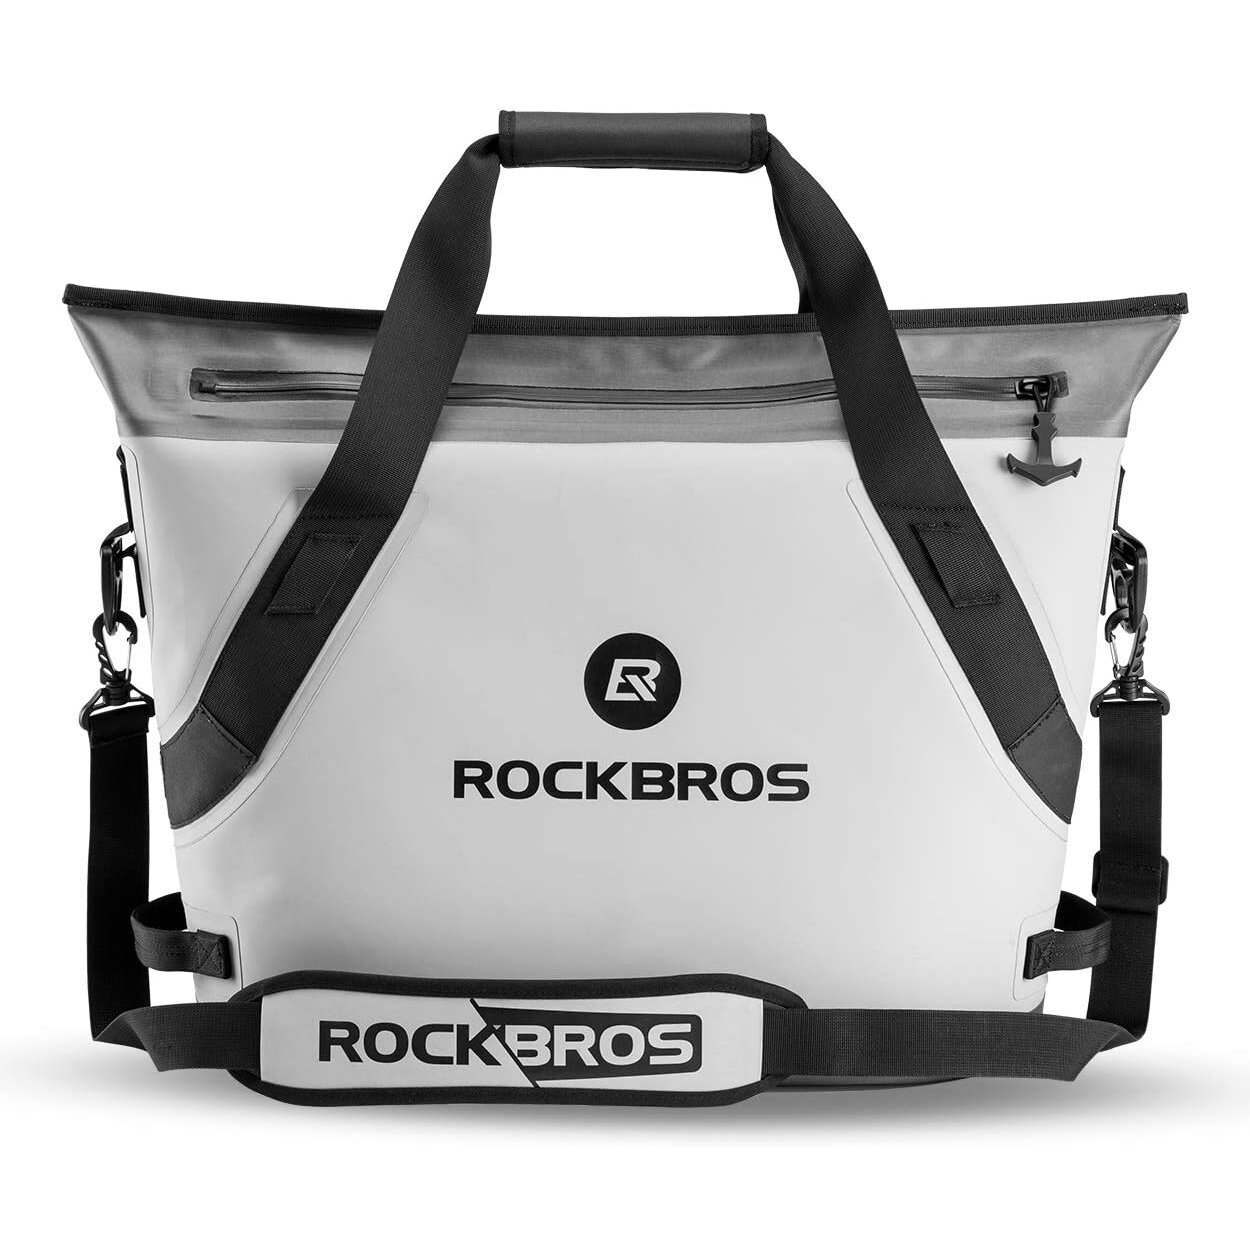 ROCKBROS BX-003 22L Cooler Bag Waterproof Ice Pack Lunch Bag Camping Picnic Foil Thermal Insulated Handbag